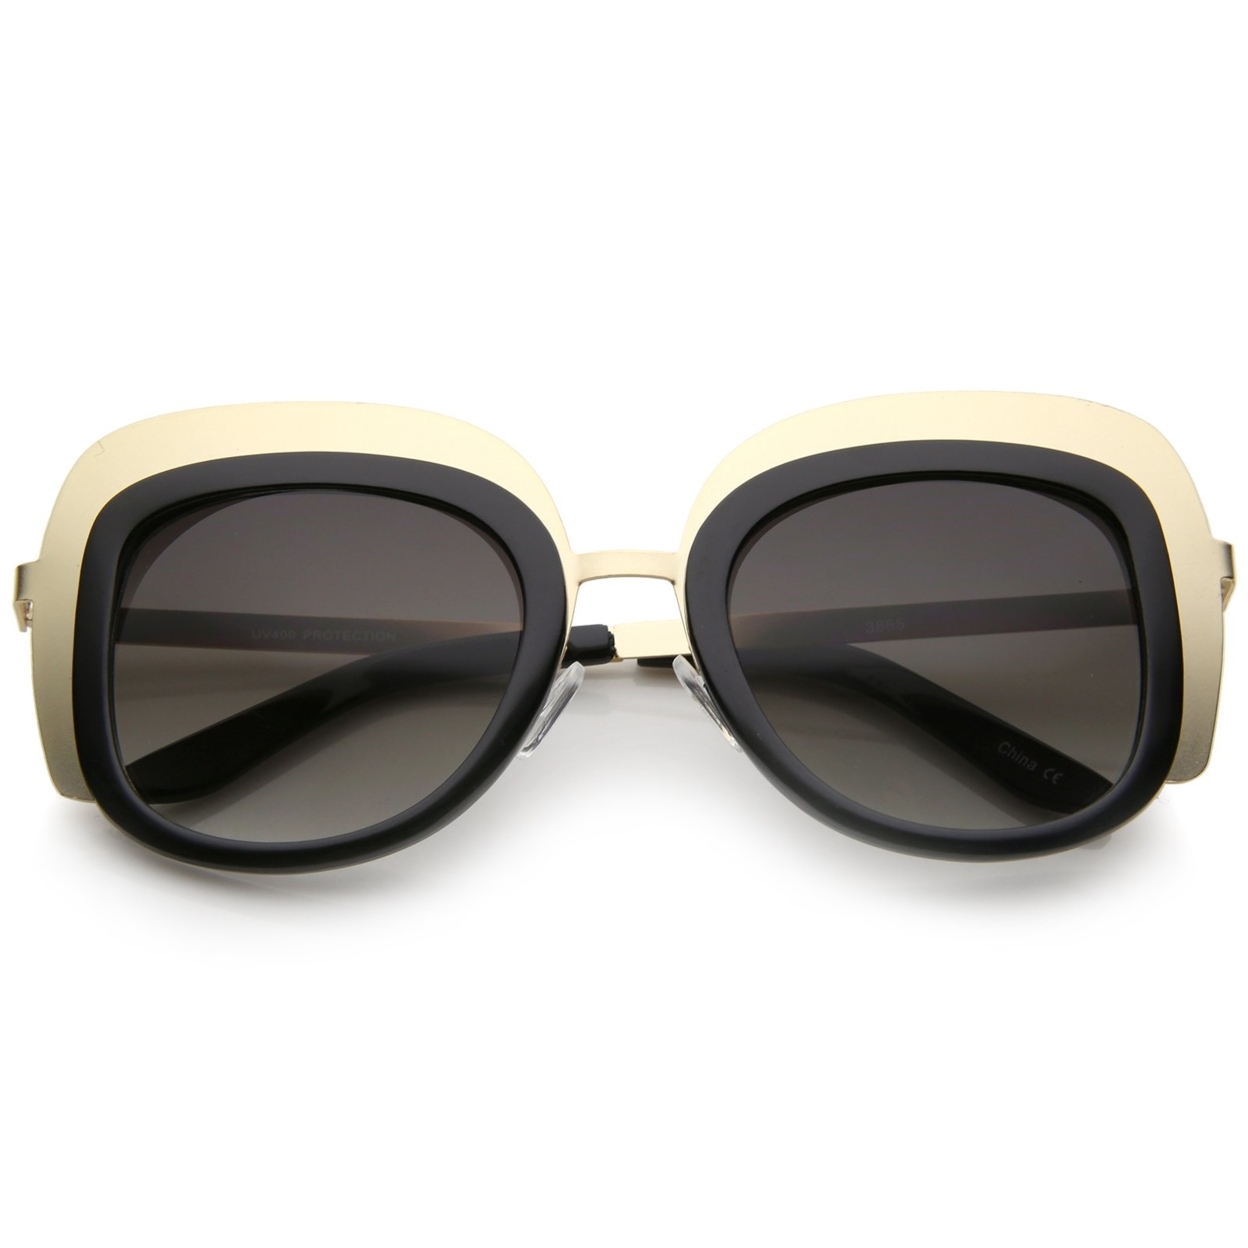 Women's Oversize Two-Tone Metal Frame Border Square Sunglasses 43mm - Gold-Tortoise / Amber